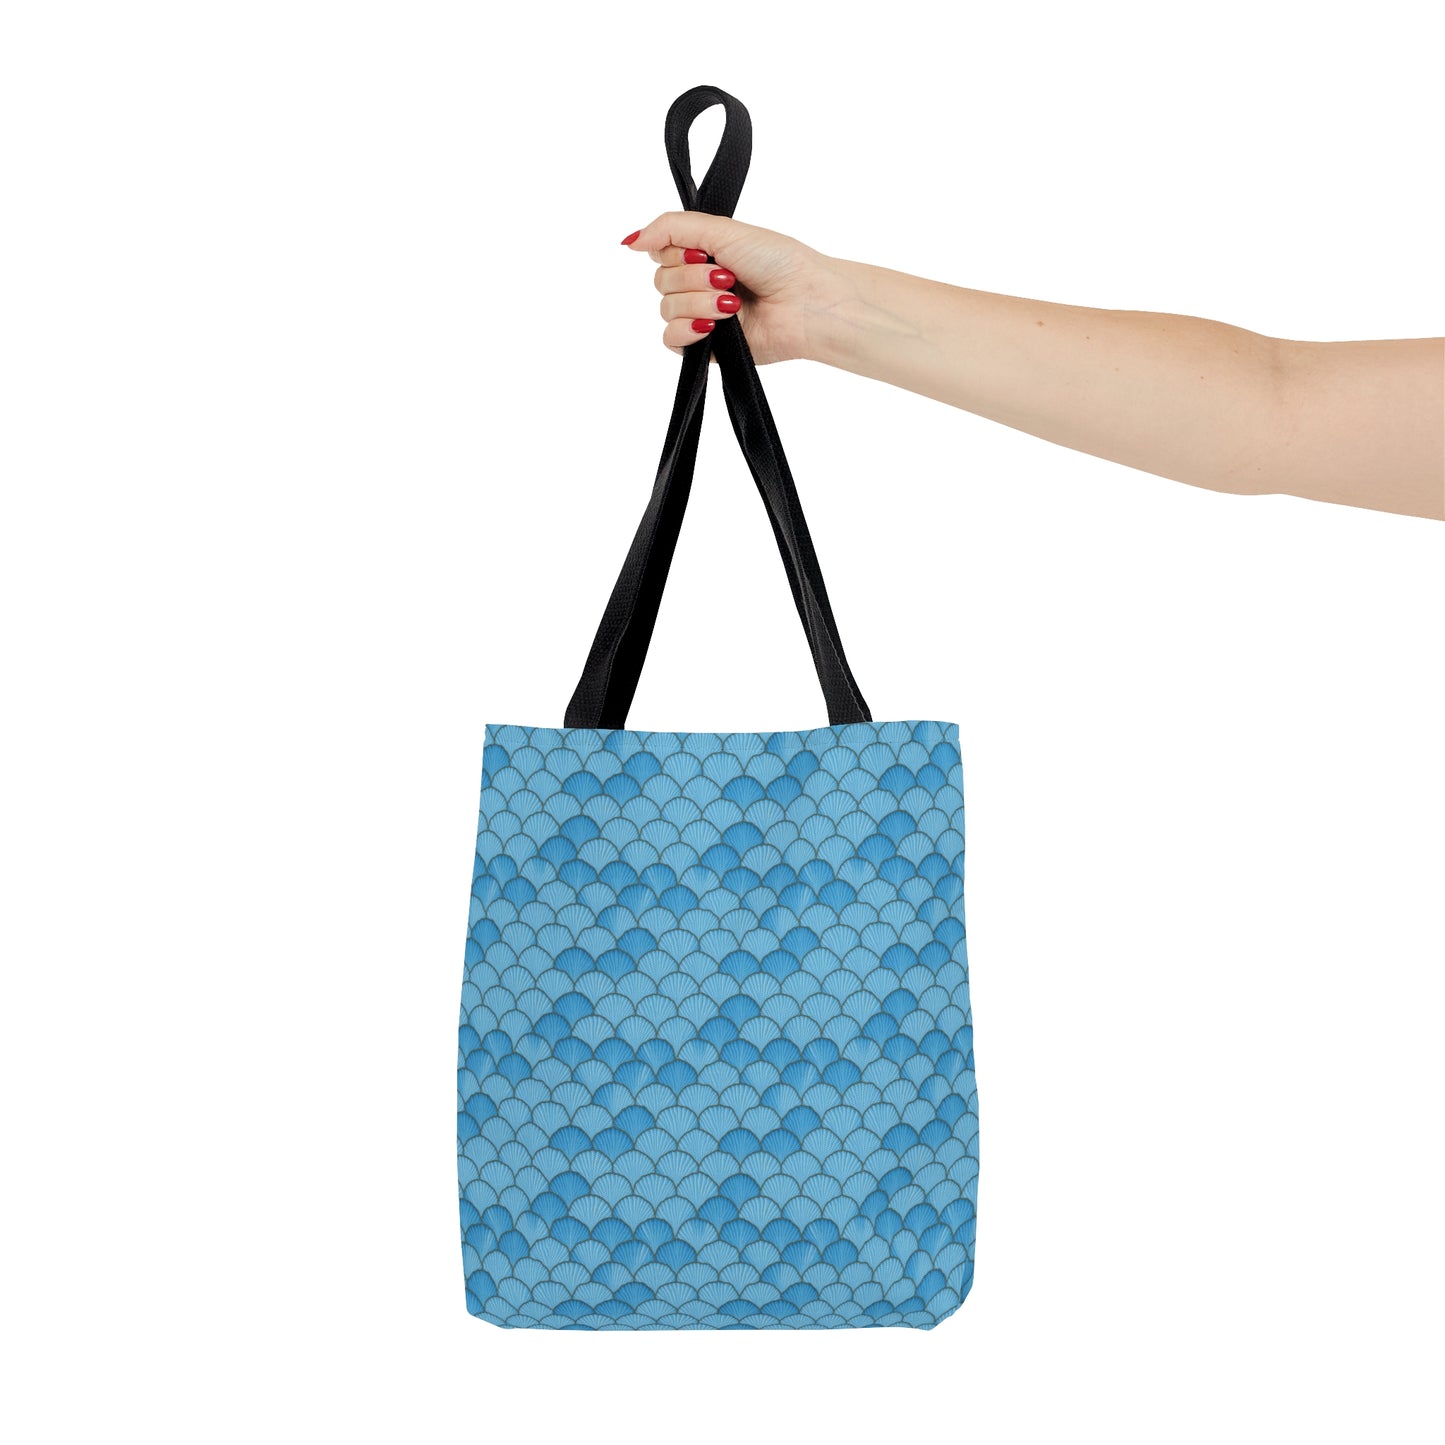 Blue Mermaid Seashell Tote Bag - Enchanting and Beach-Ready Accessory Tote Bag